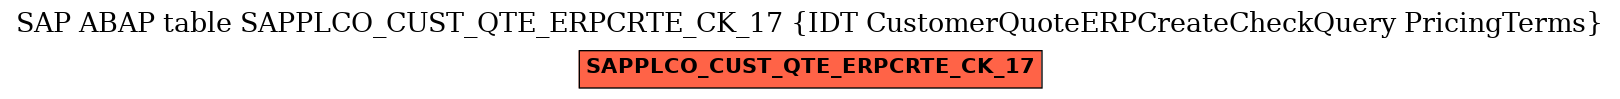 E-R Diagram for table SAPPLCO_CUST_QTE_ERPCRTE_CK_17 (IDT CustomerQuoteERPCreateCheckQuery PricingTerms)